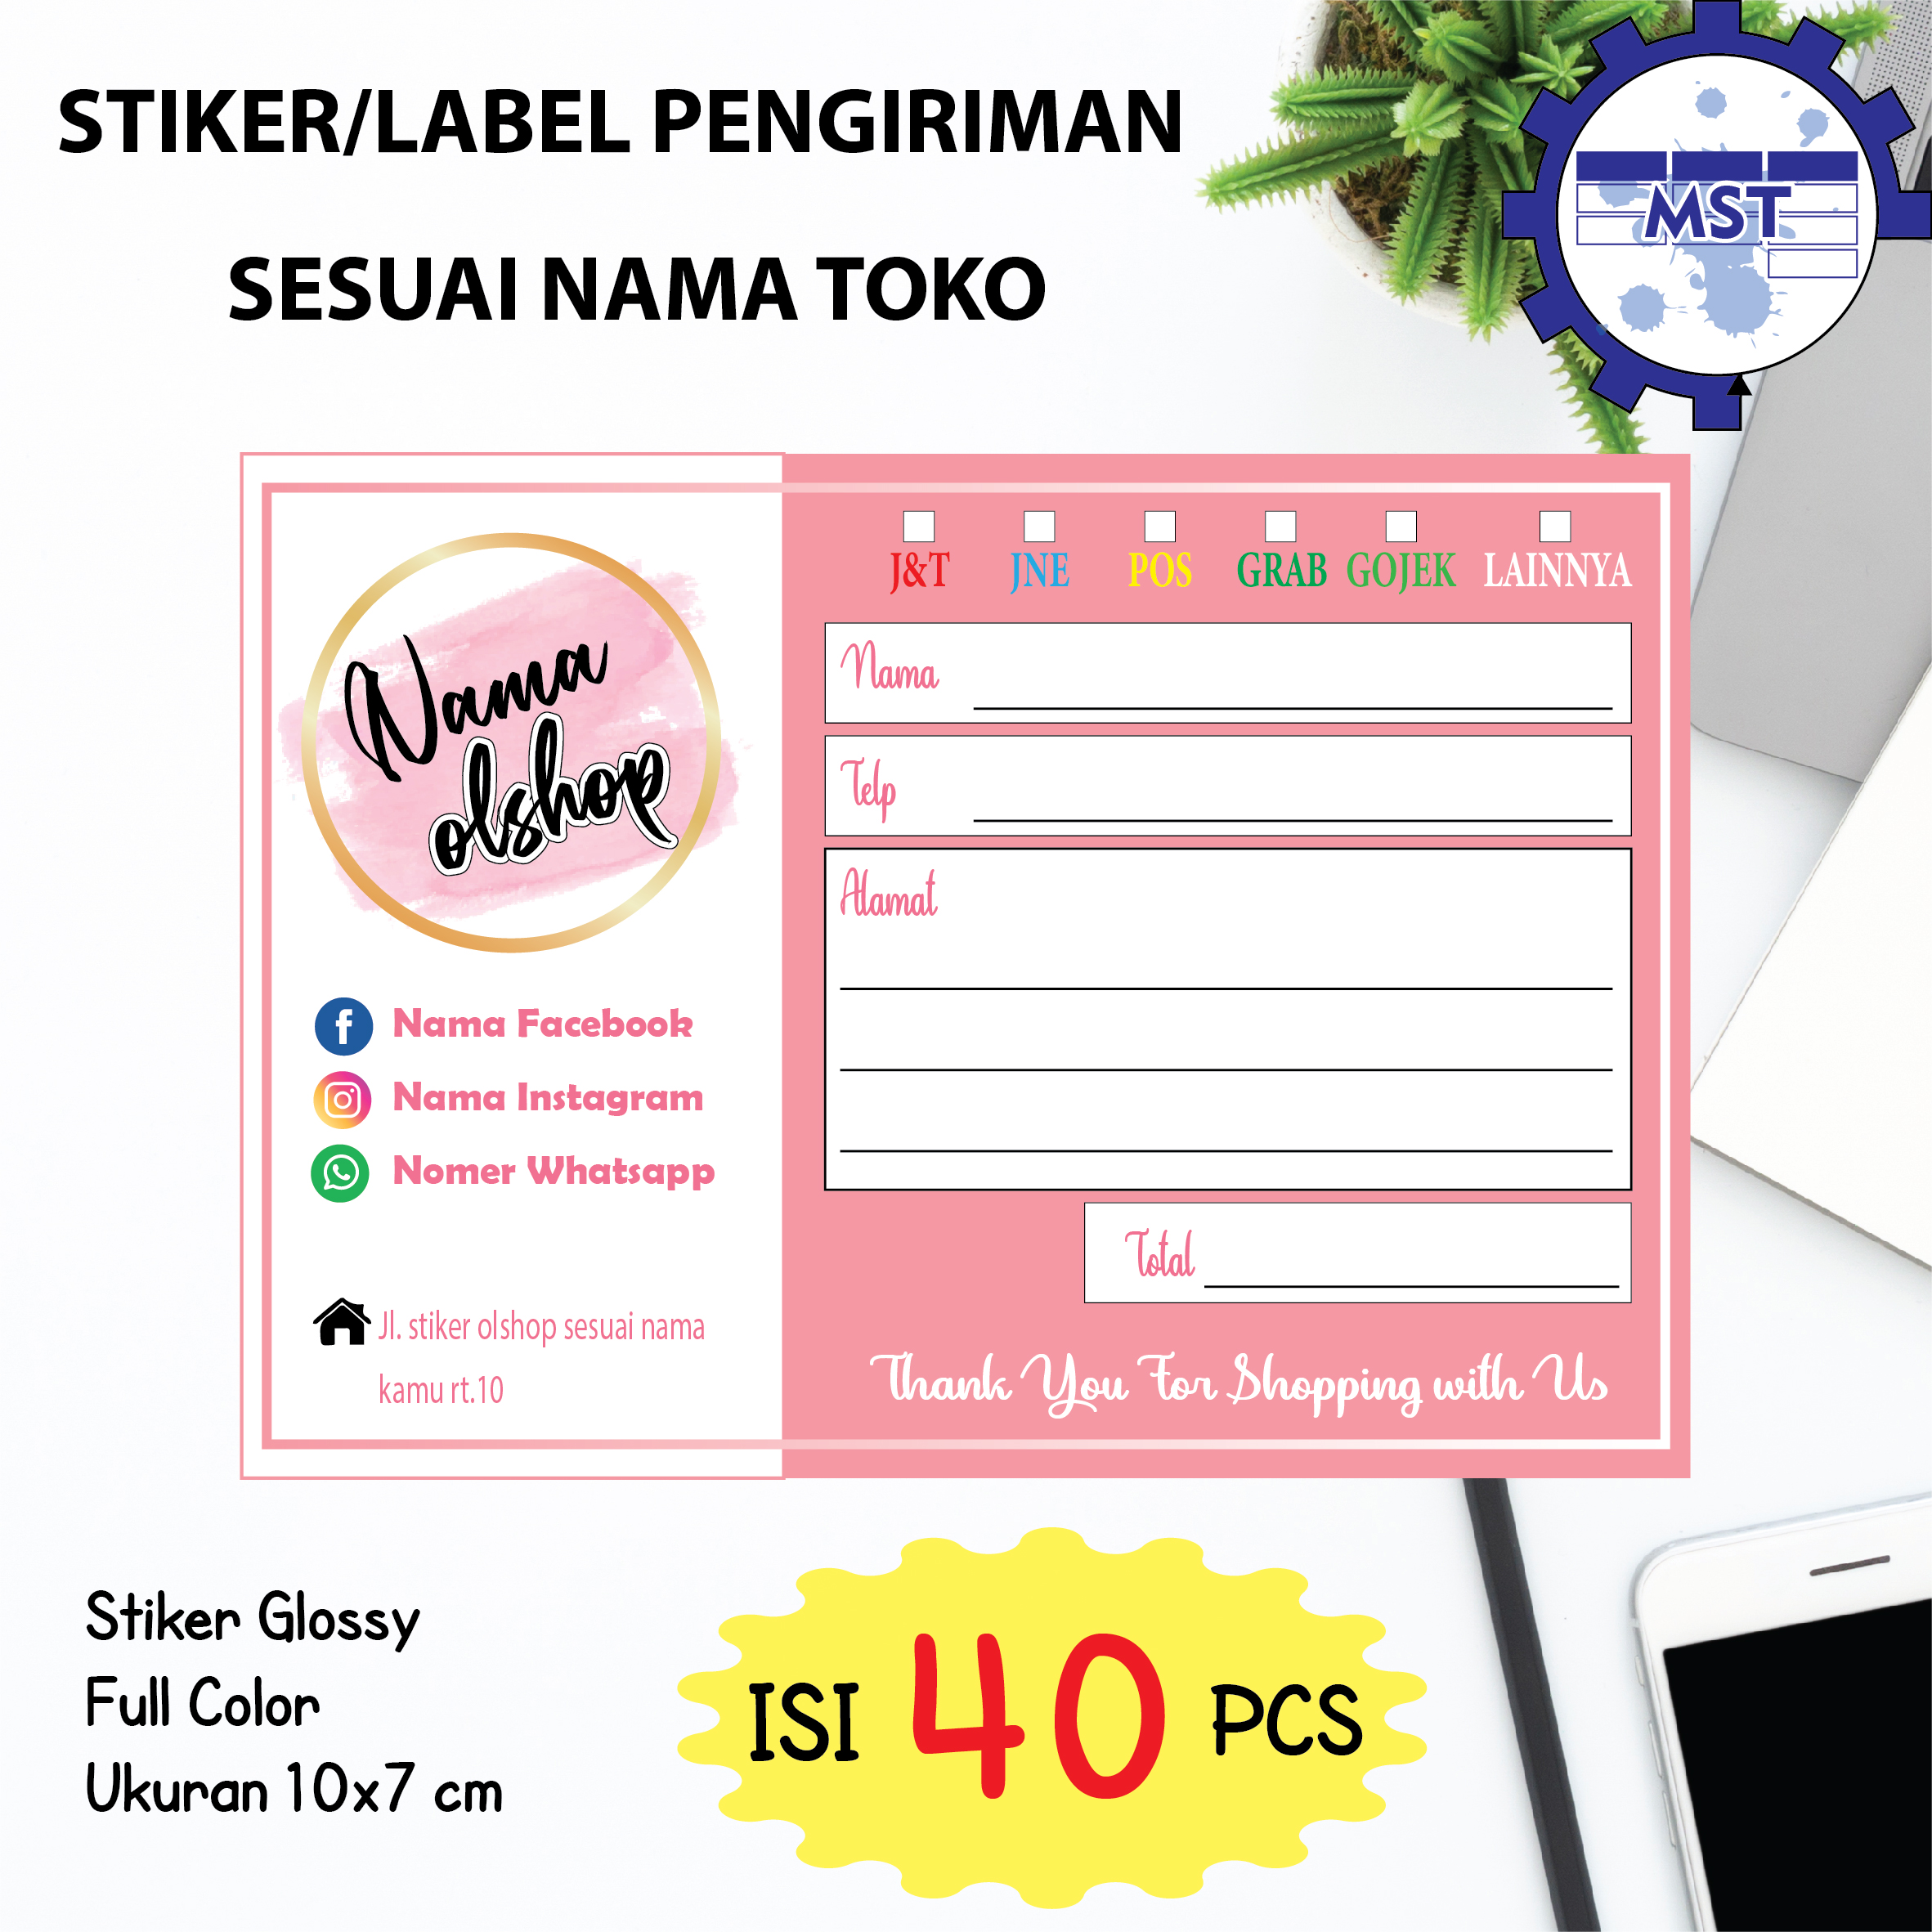 Stiker Pengiriman Label Pengiriman Olshop Glossy Design Sesuai Nama Toko Lazada Indonesia